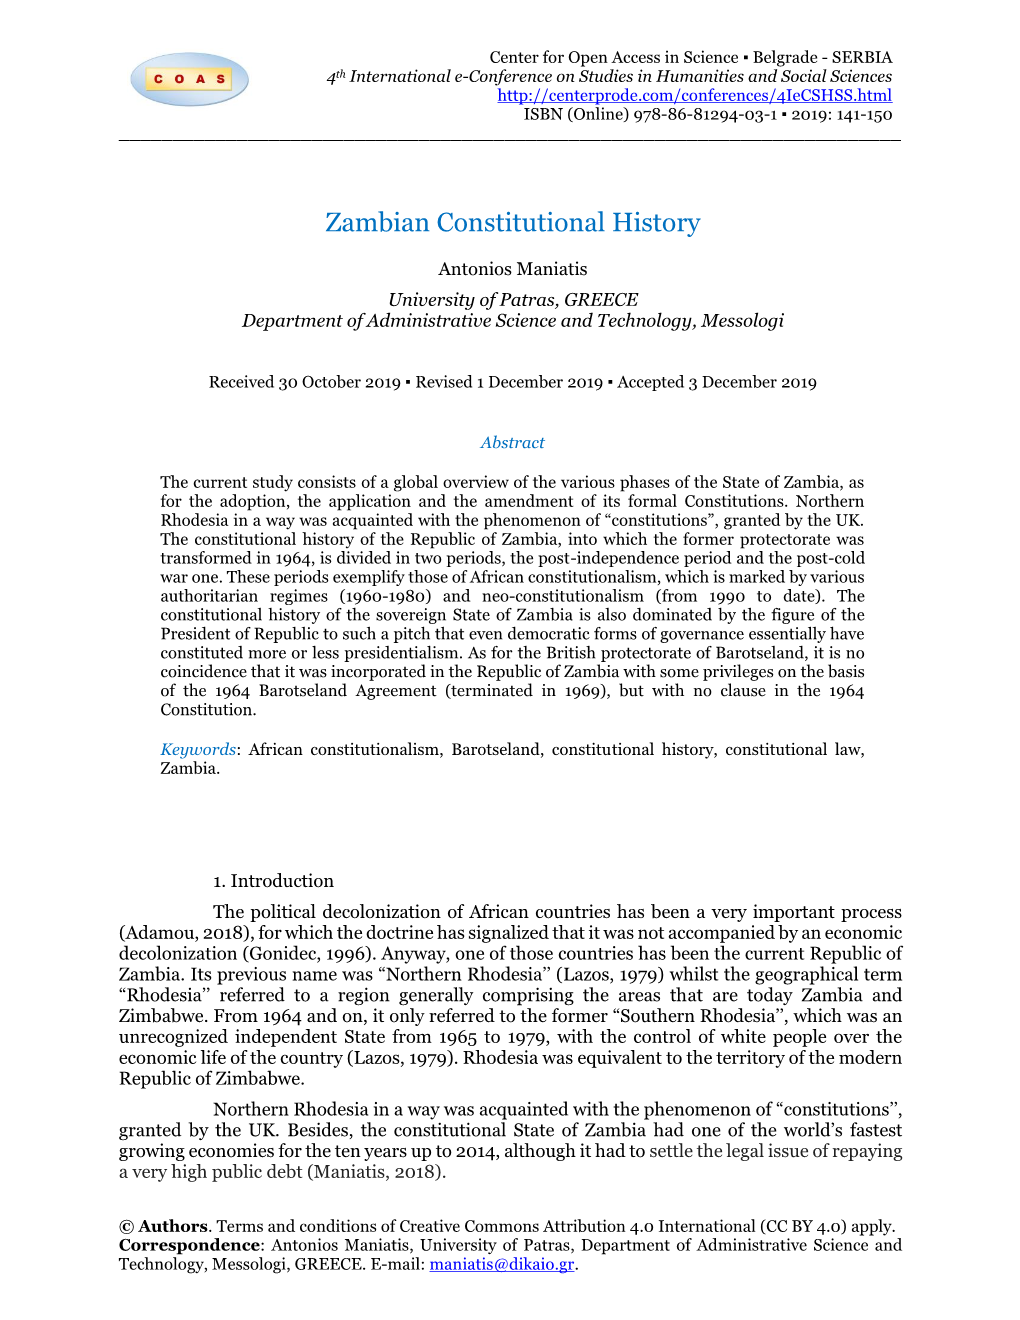 Zambian Constitutional History